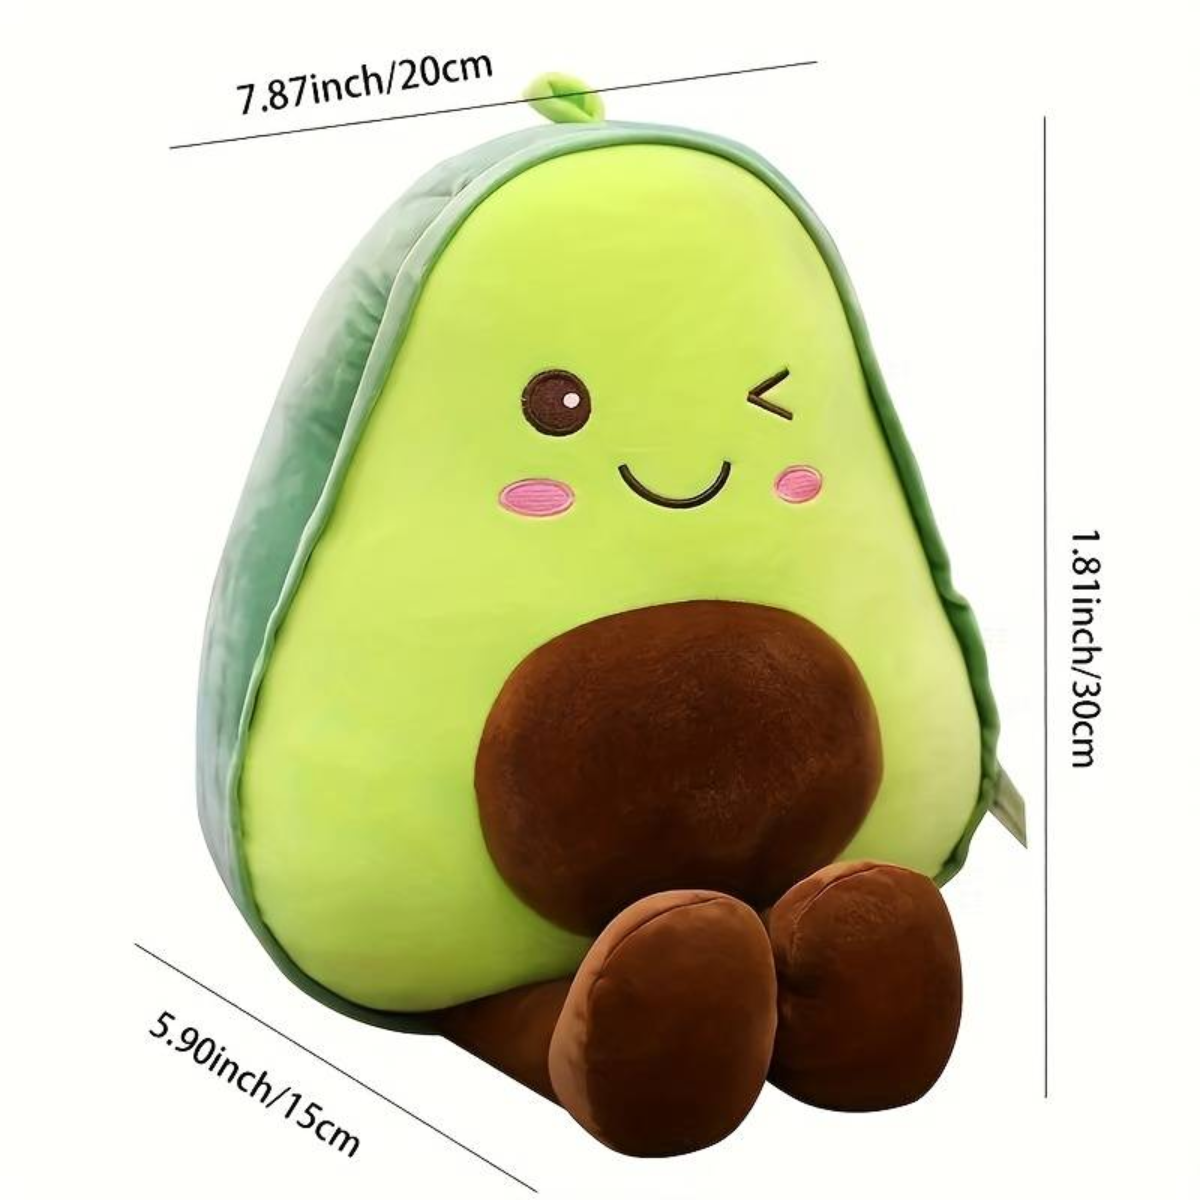 Cuddle-Munch Avocado Plush Pillow – 30cm of Smiling, Squishable Joy!